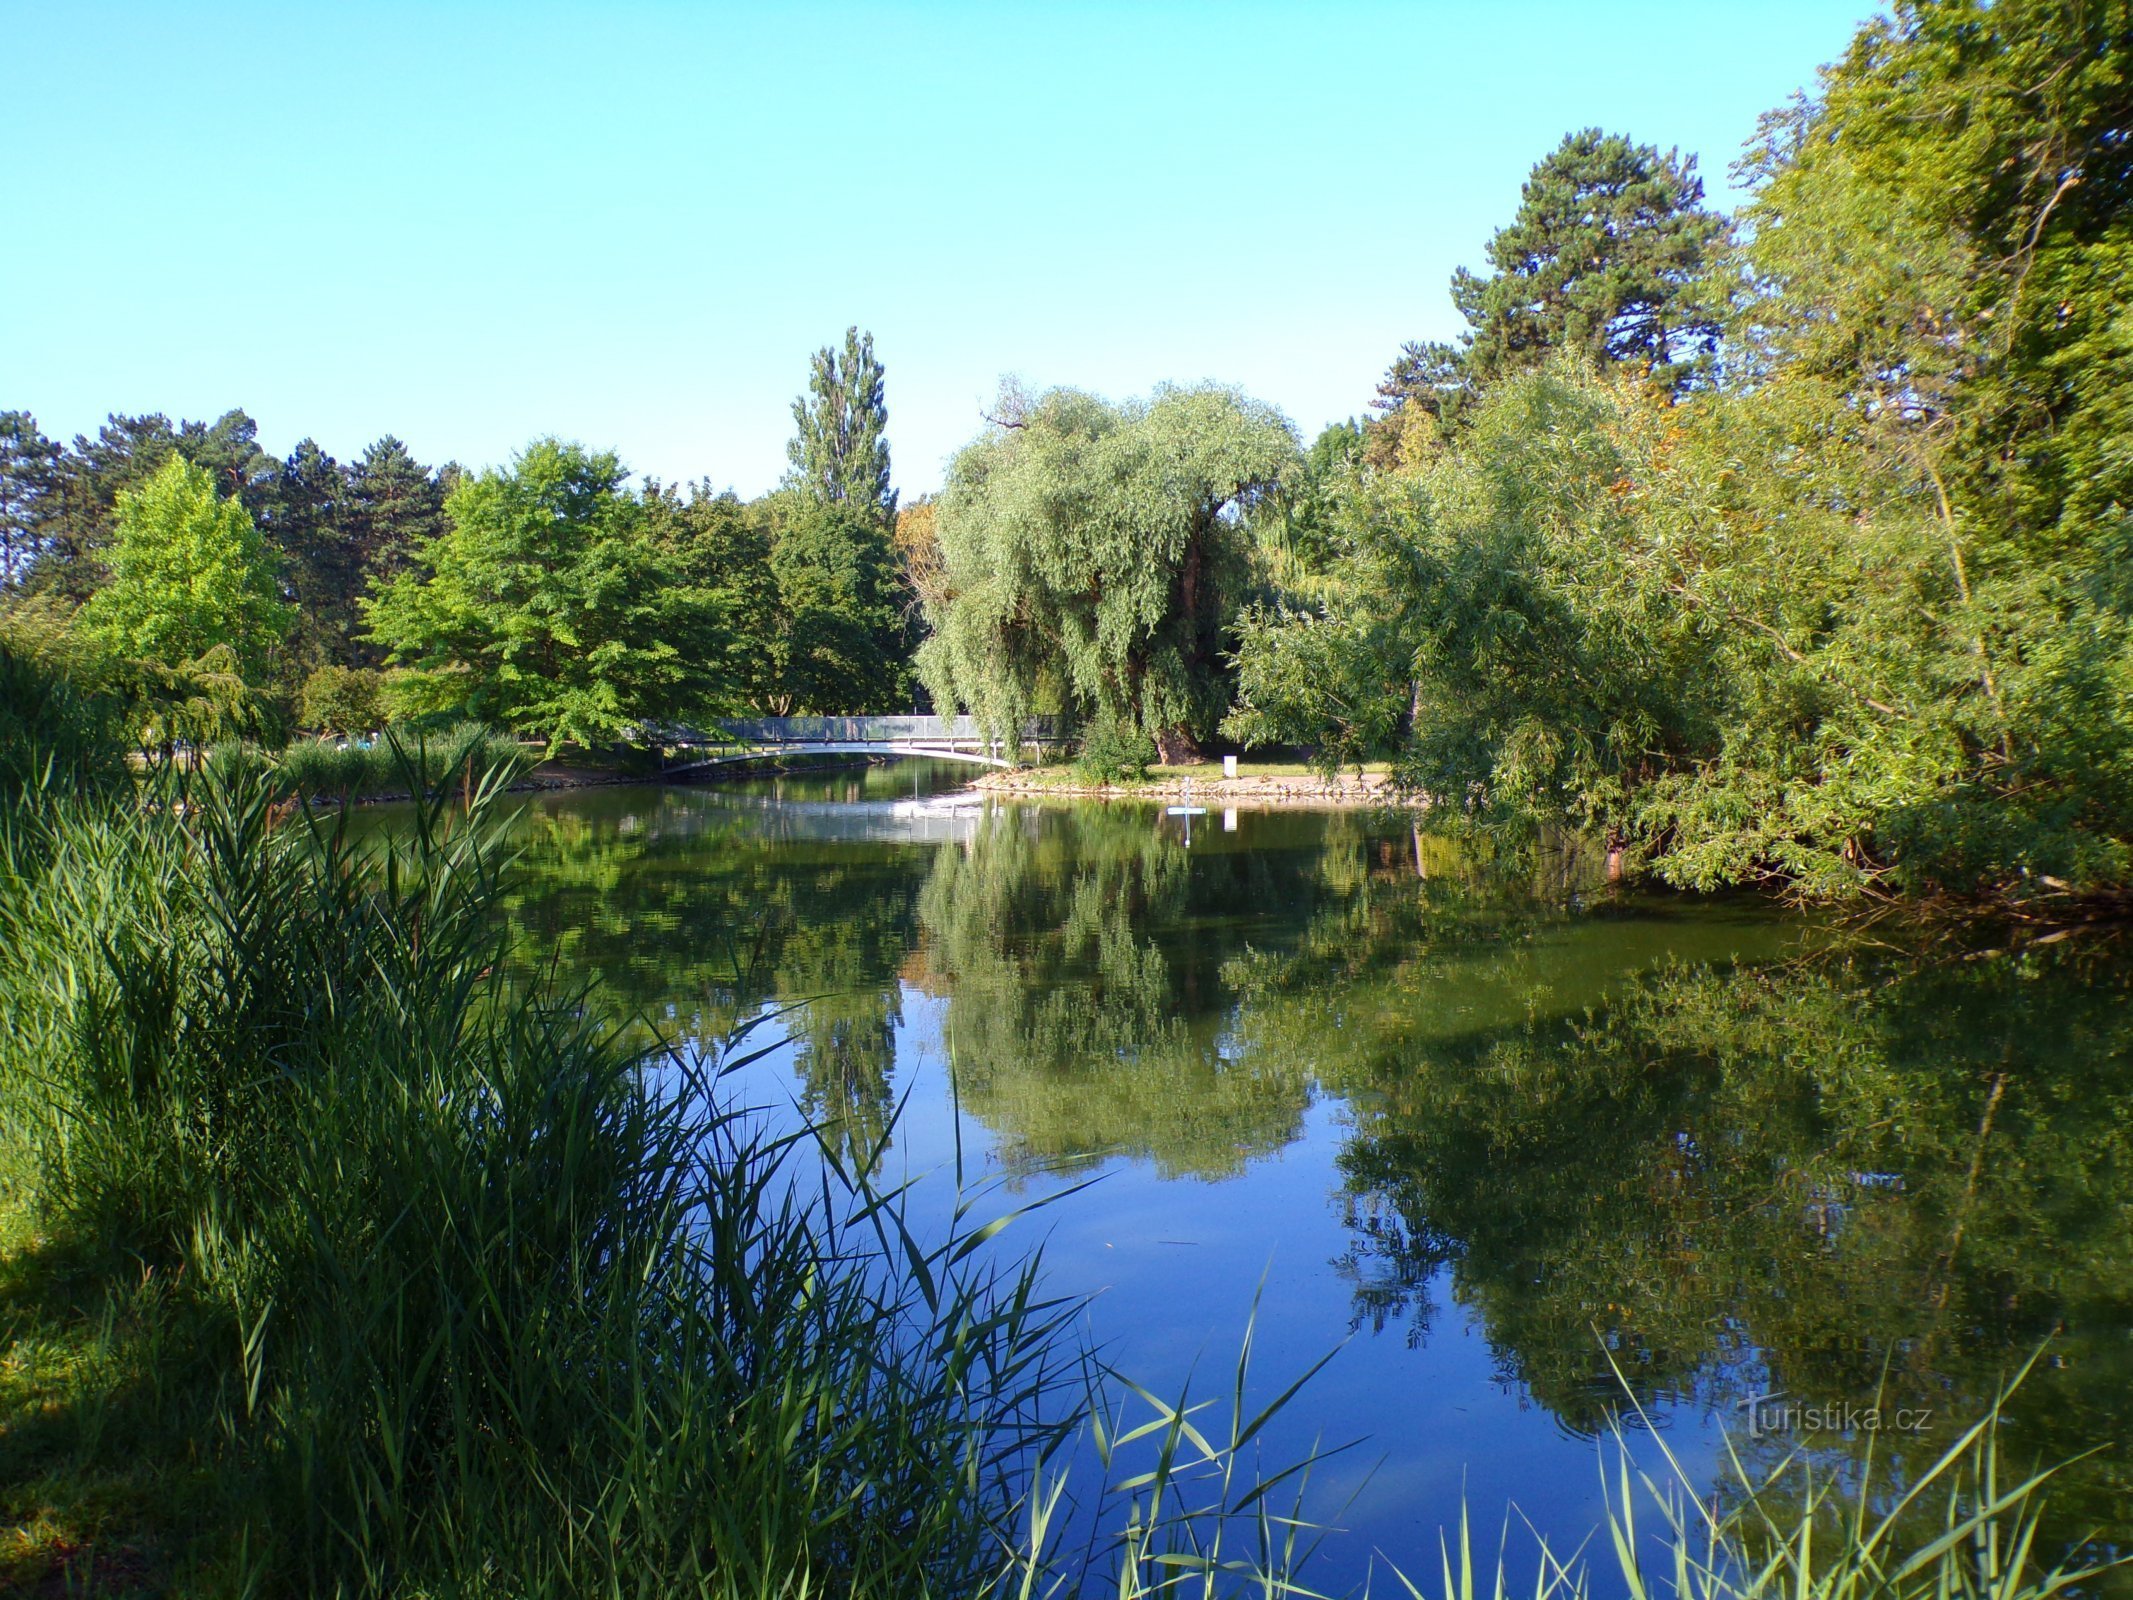 Šimkovy Sady 的池塘 (Hradec Králové, 24.7.2022/XNUMX/XNUMX)